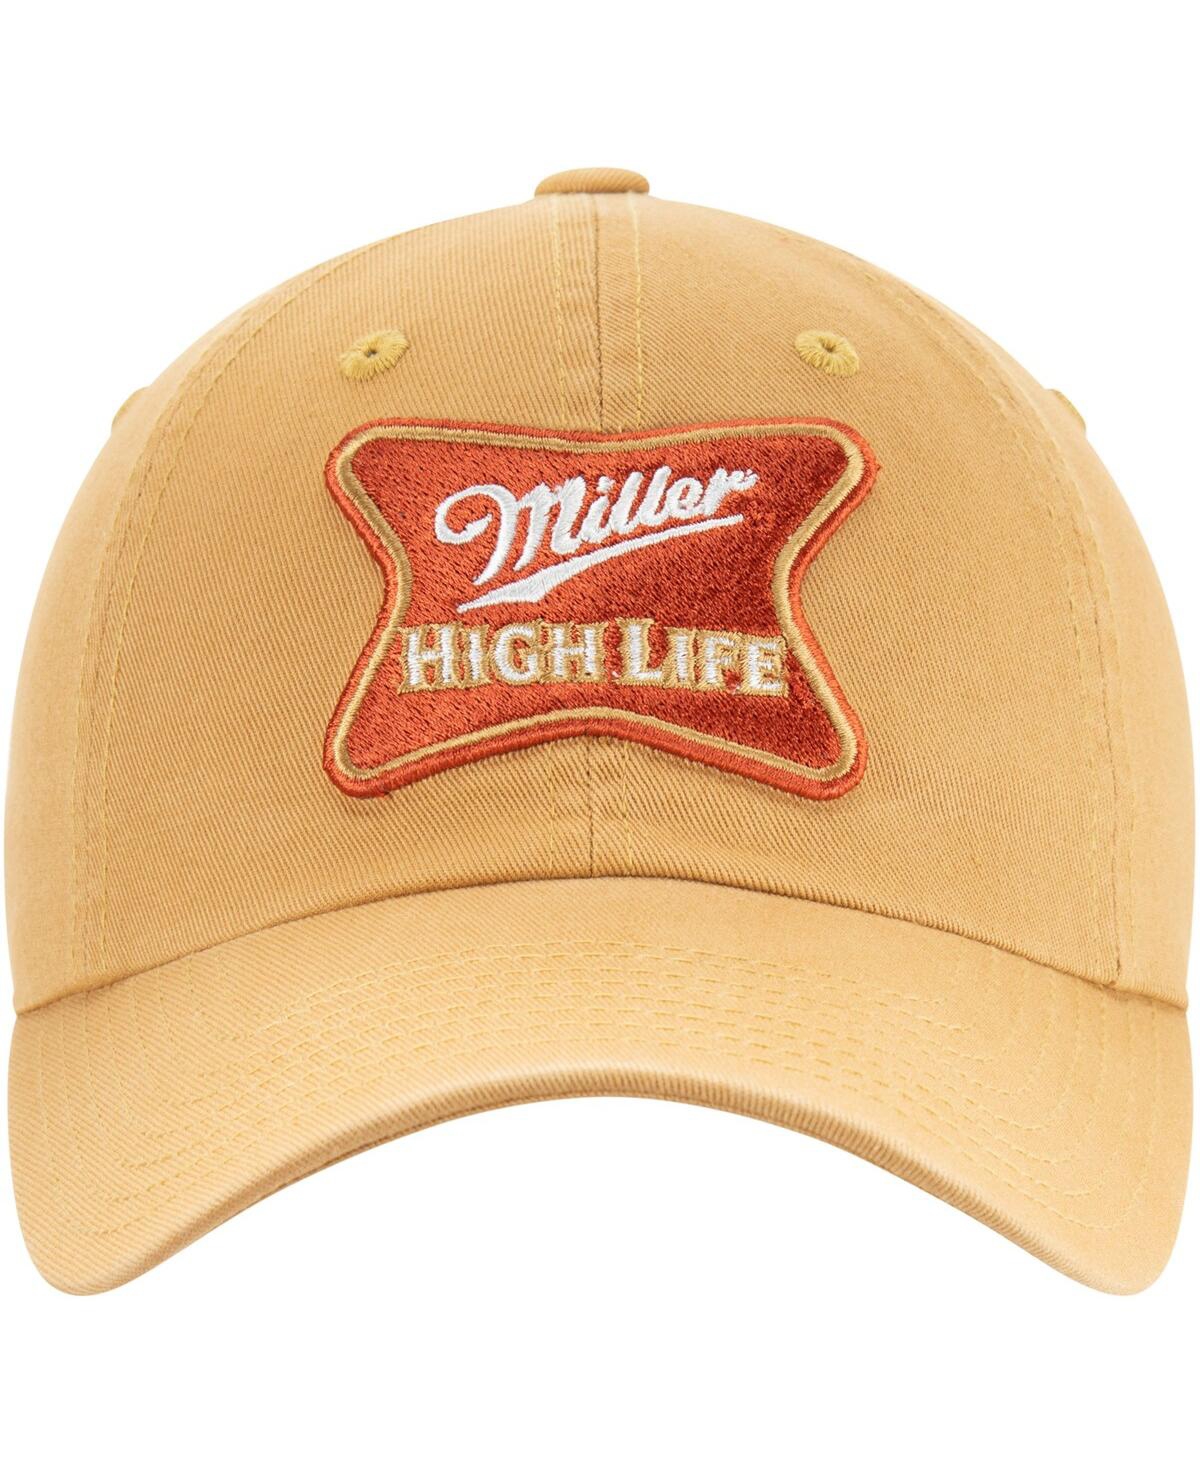 Shop American Needle Men's  Gold Miller Beer Ballpark Adjustable Hat